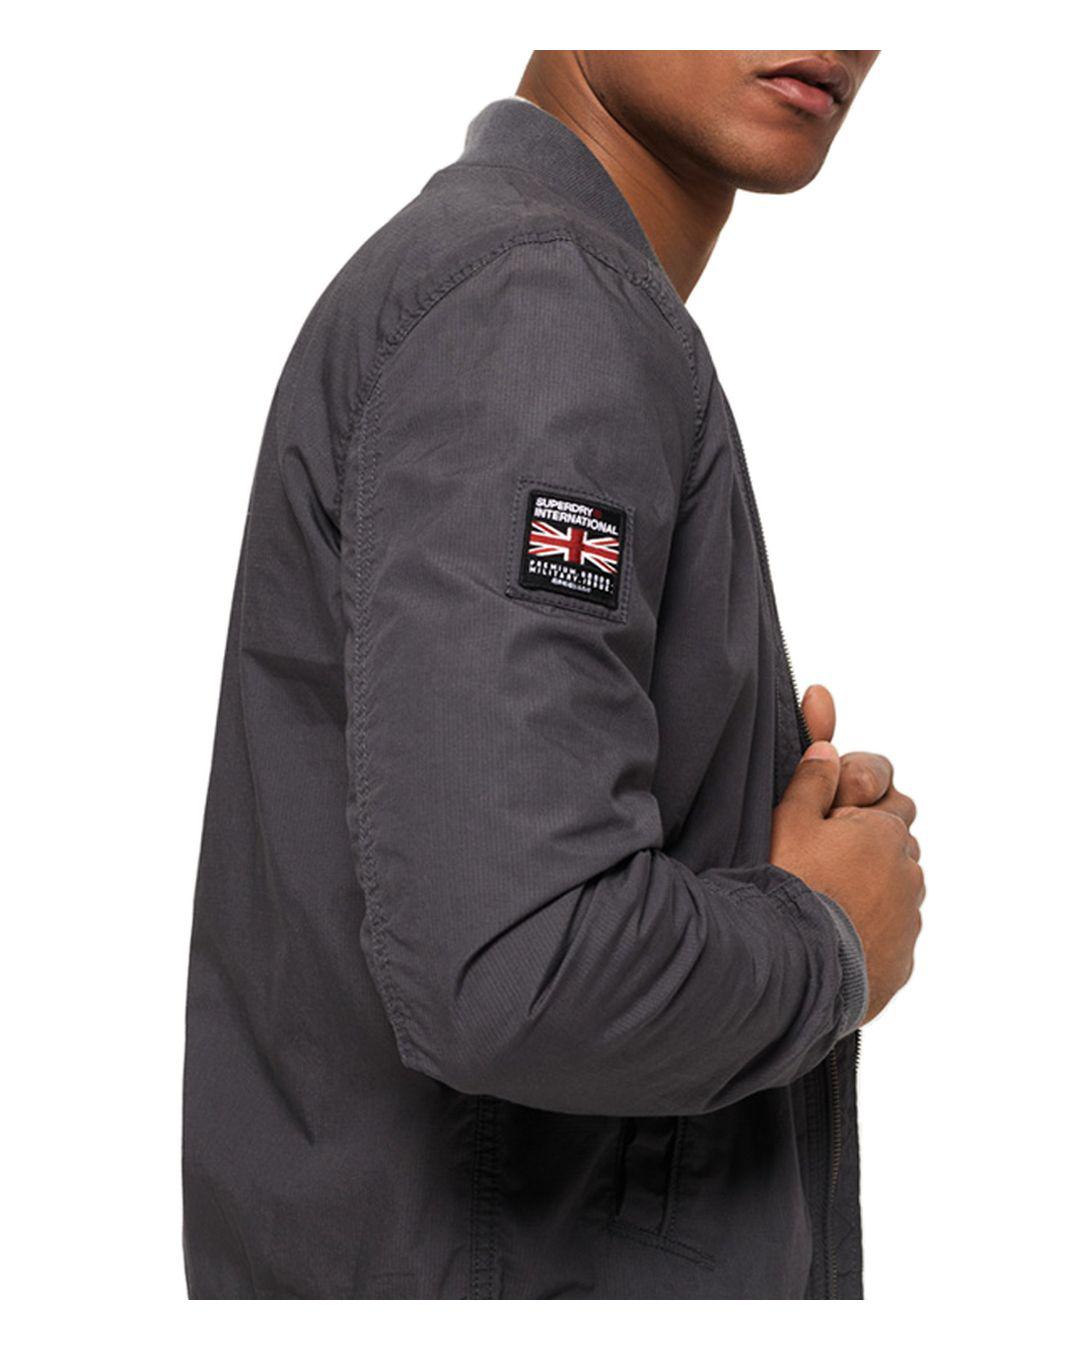 Superdry Cotton Rookie Duty Bomber Jacket in Dark Grey (Gray) for Men - Lyst